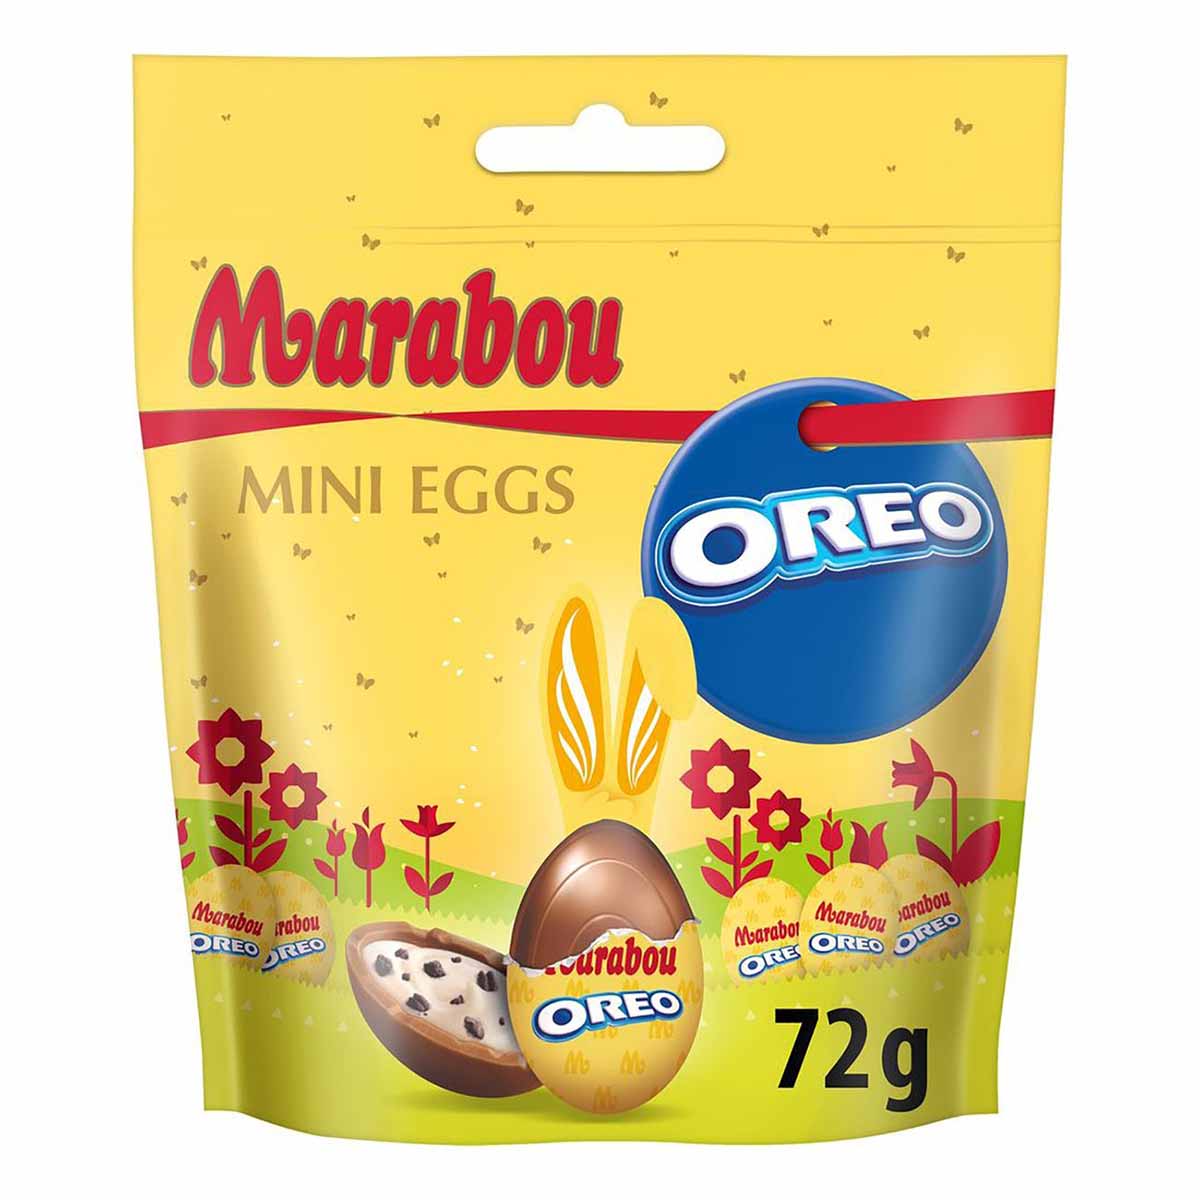 Choklad Marabou Oreo mini eggs 72 g